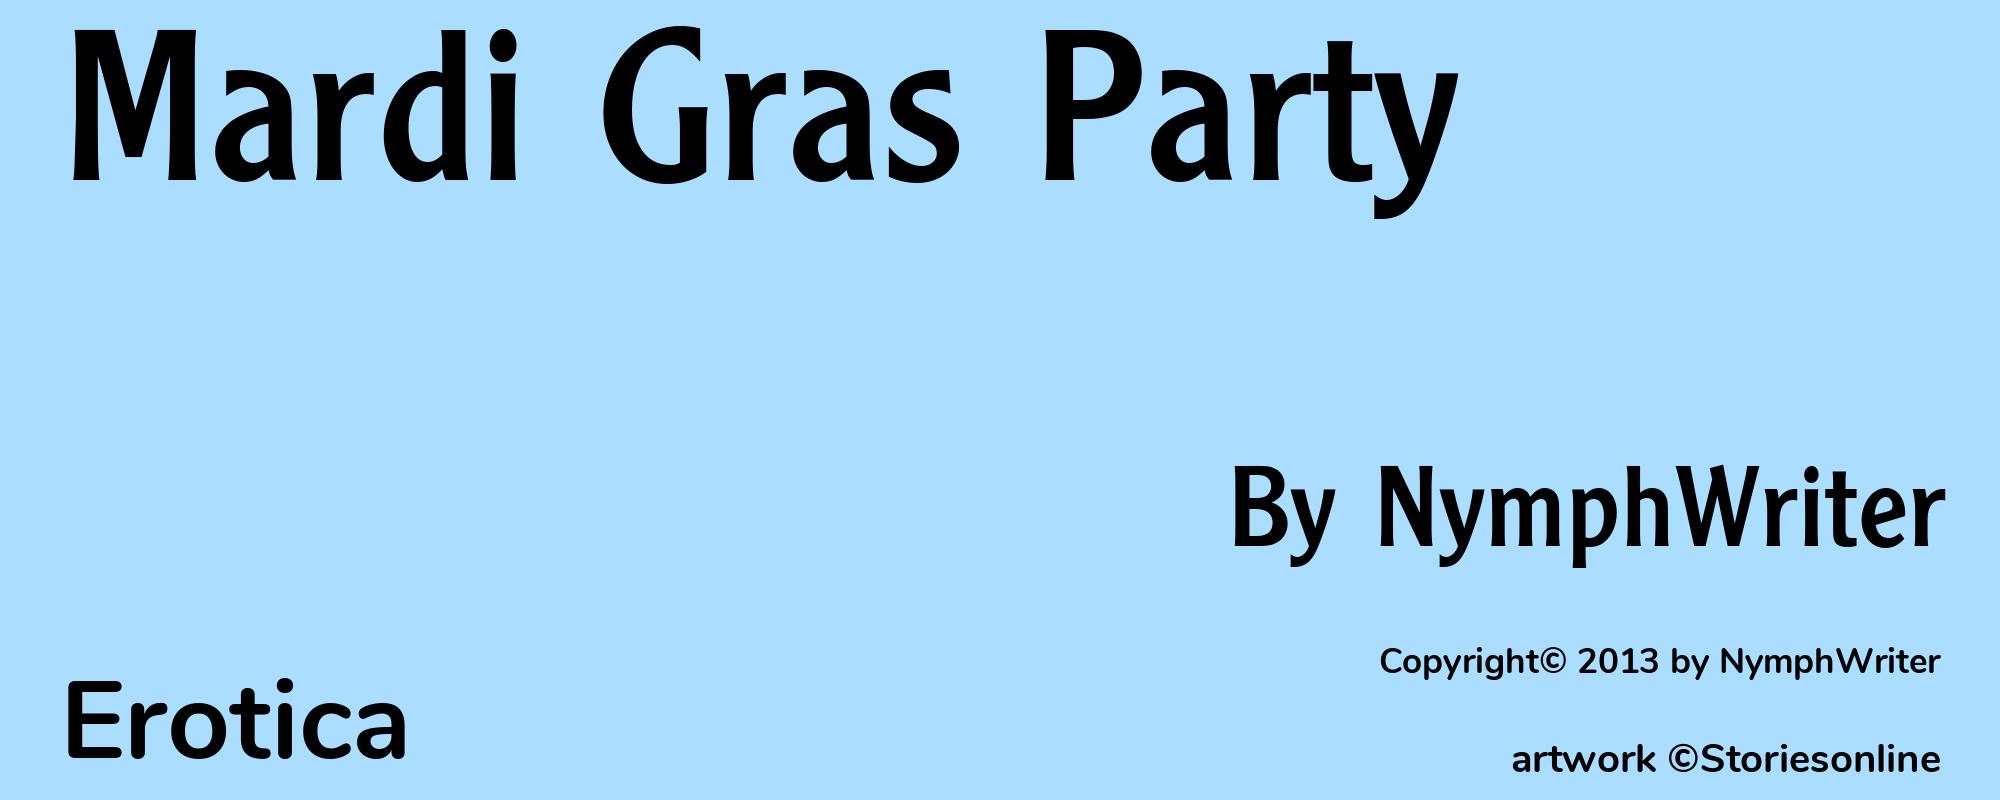 Mardi Gras Party - Cover